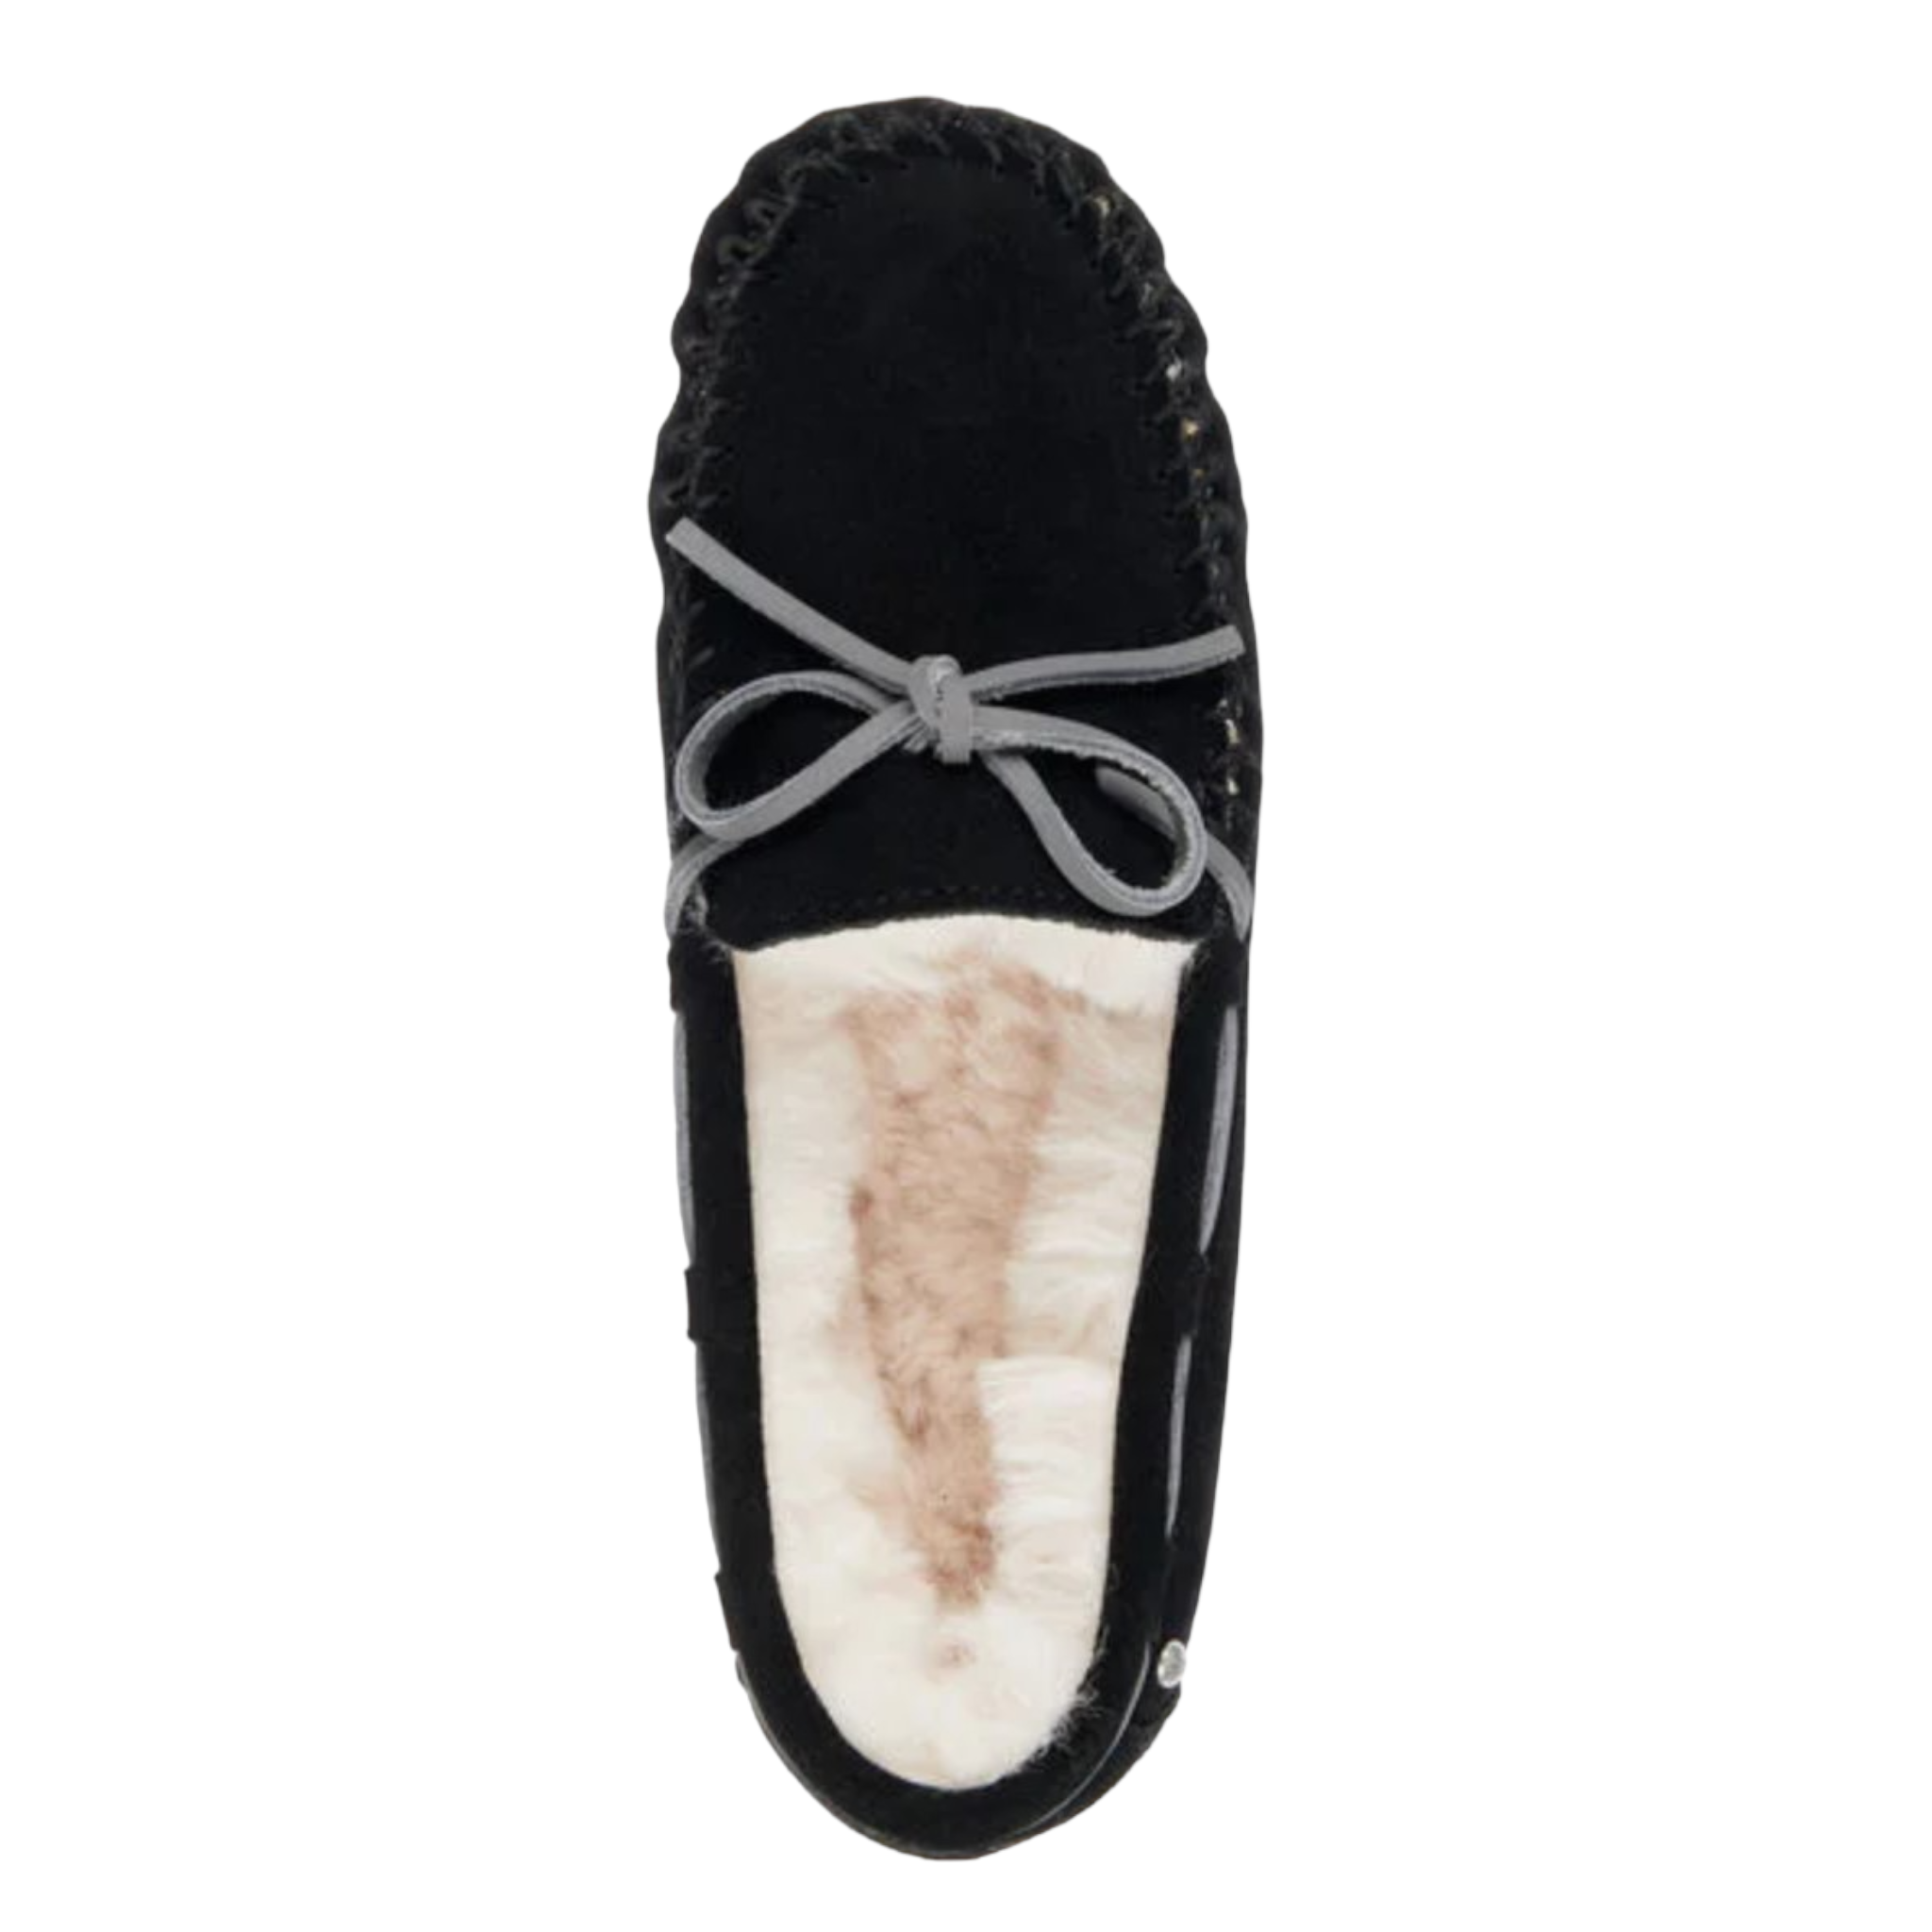 Amity - shoe&me - EMU - Slipper - Slippers, Winter, Womens